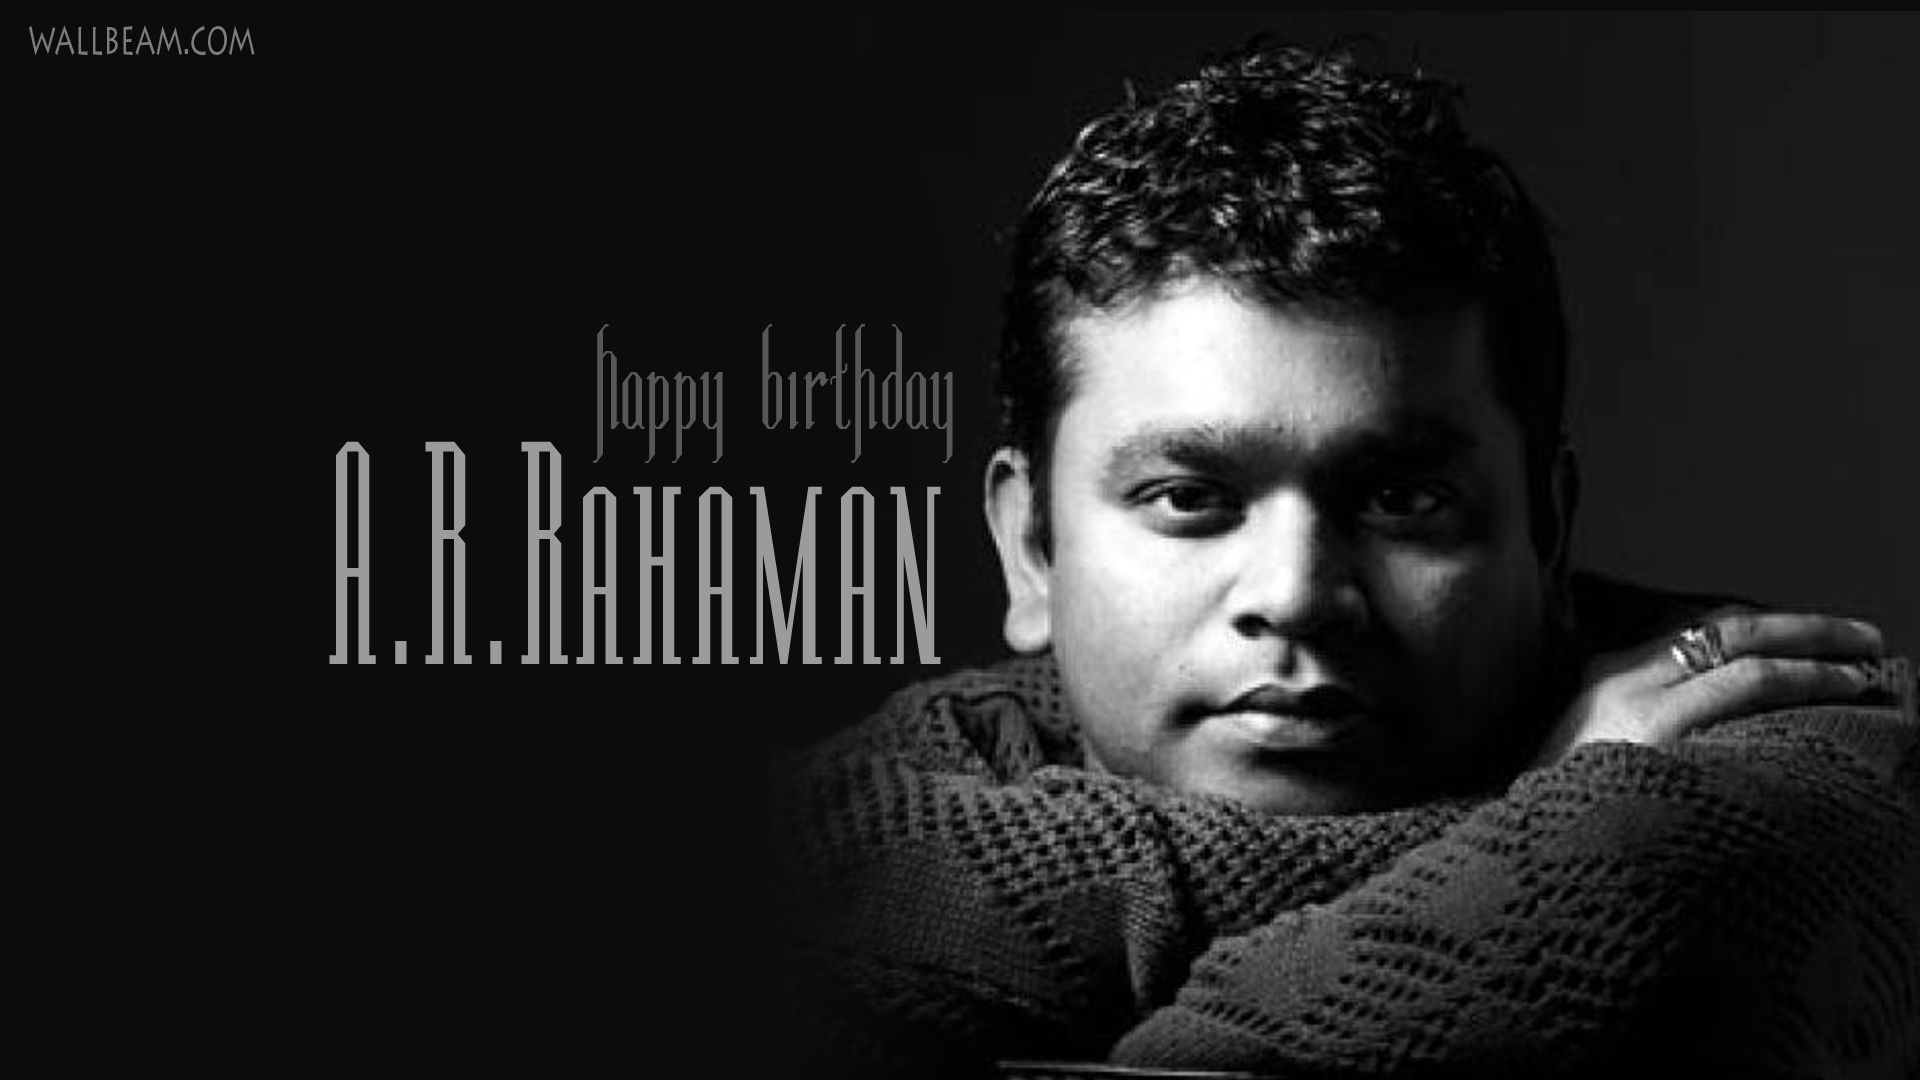 AR Rahman Happy Birthday HD Wallpaper. wallbeam.com. Happy